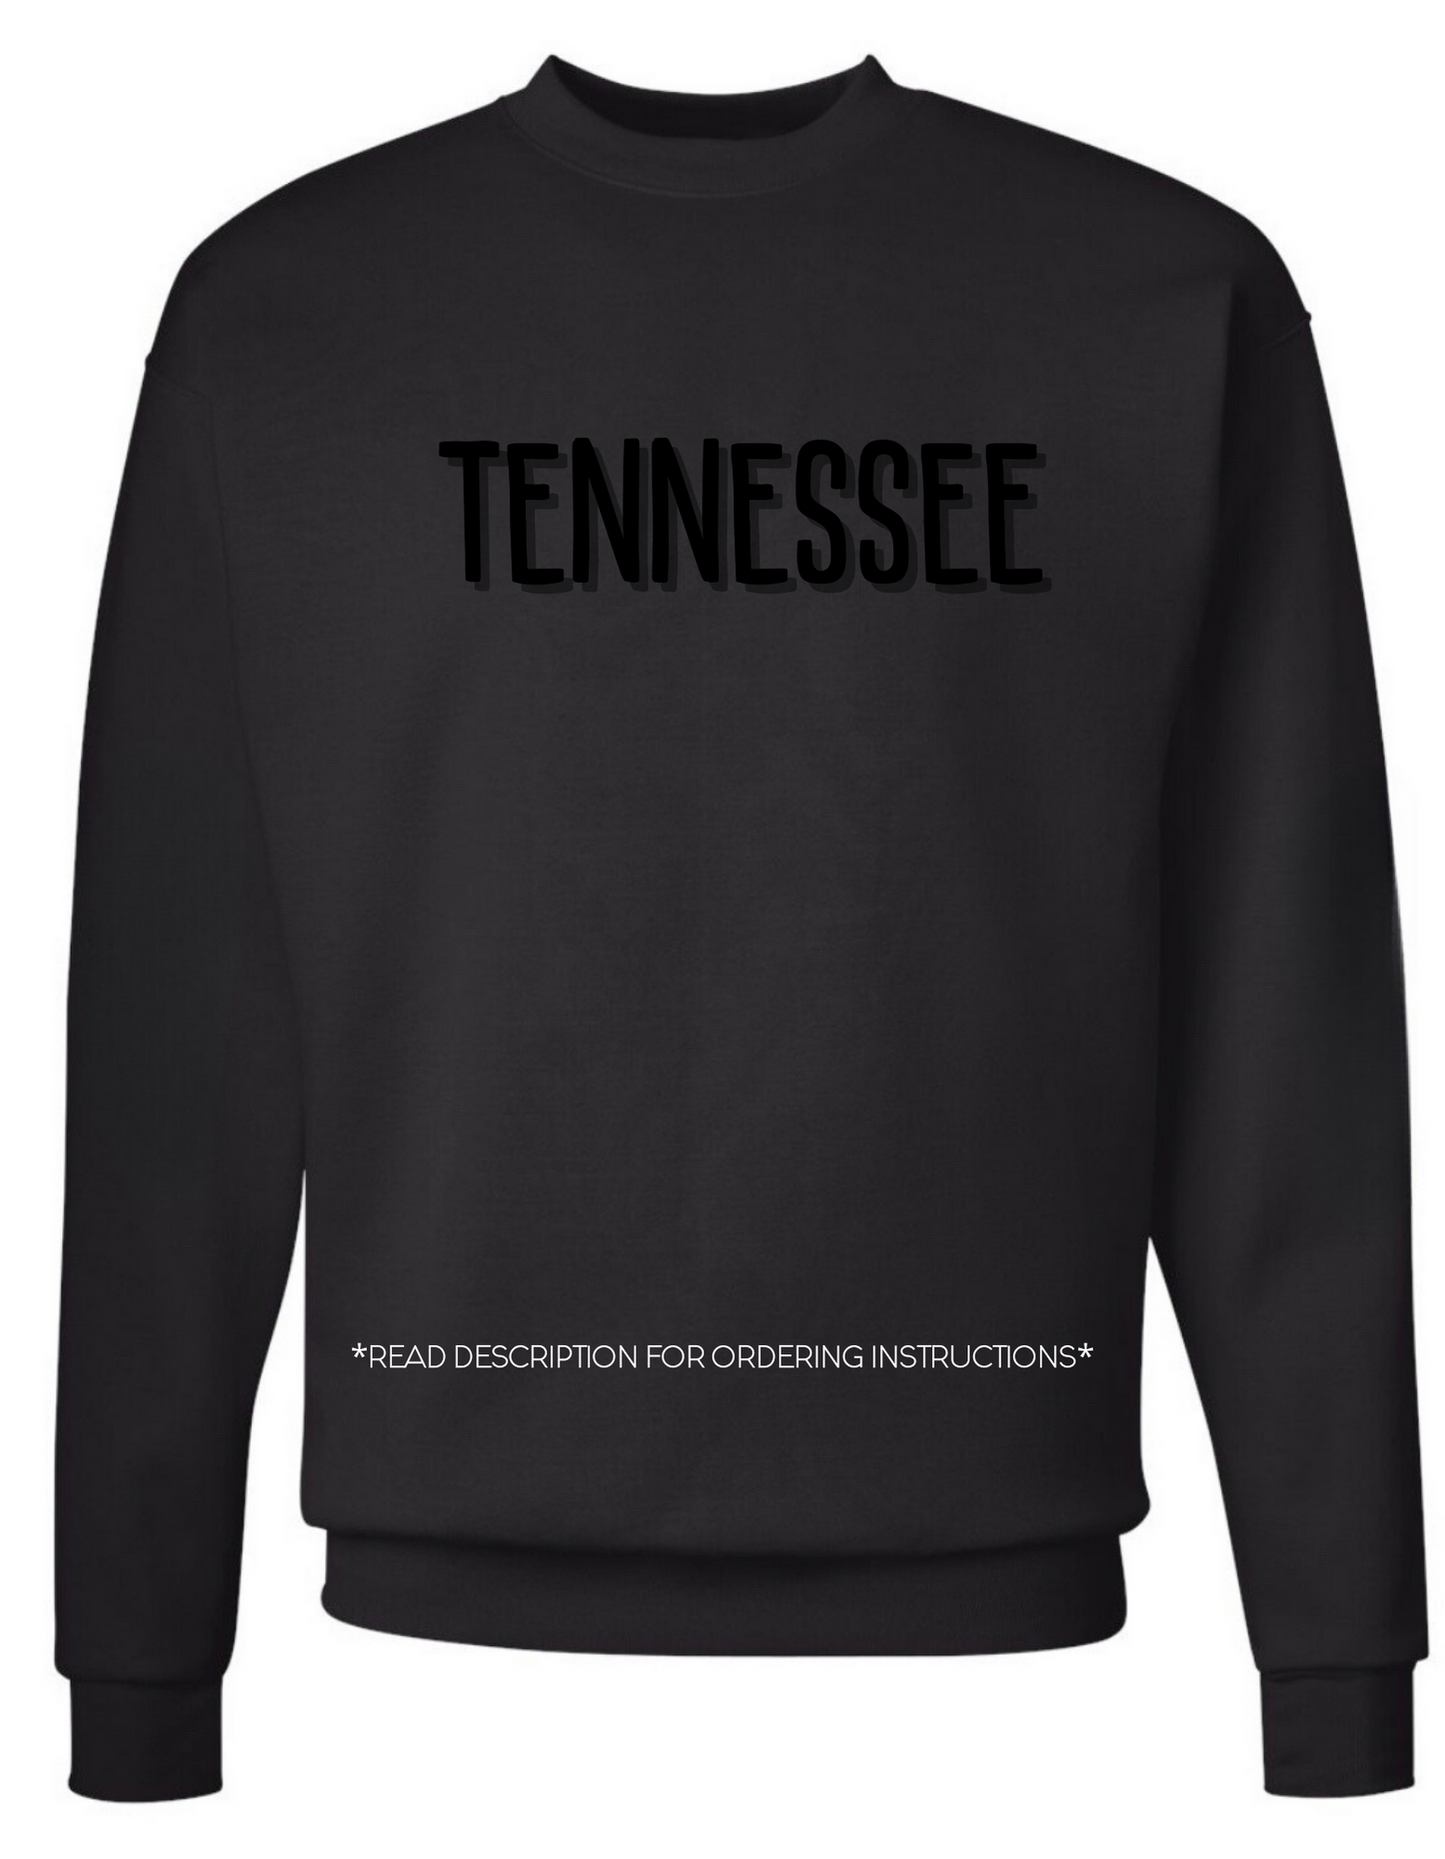 State / School / Team Monochromatic Crewneck Sweatshirt